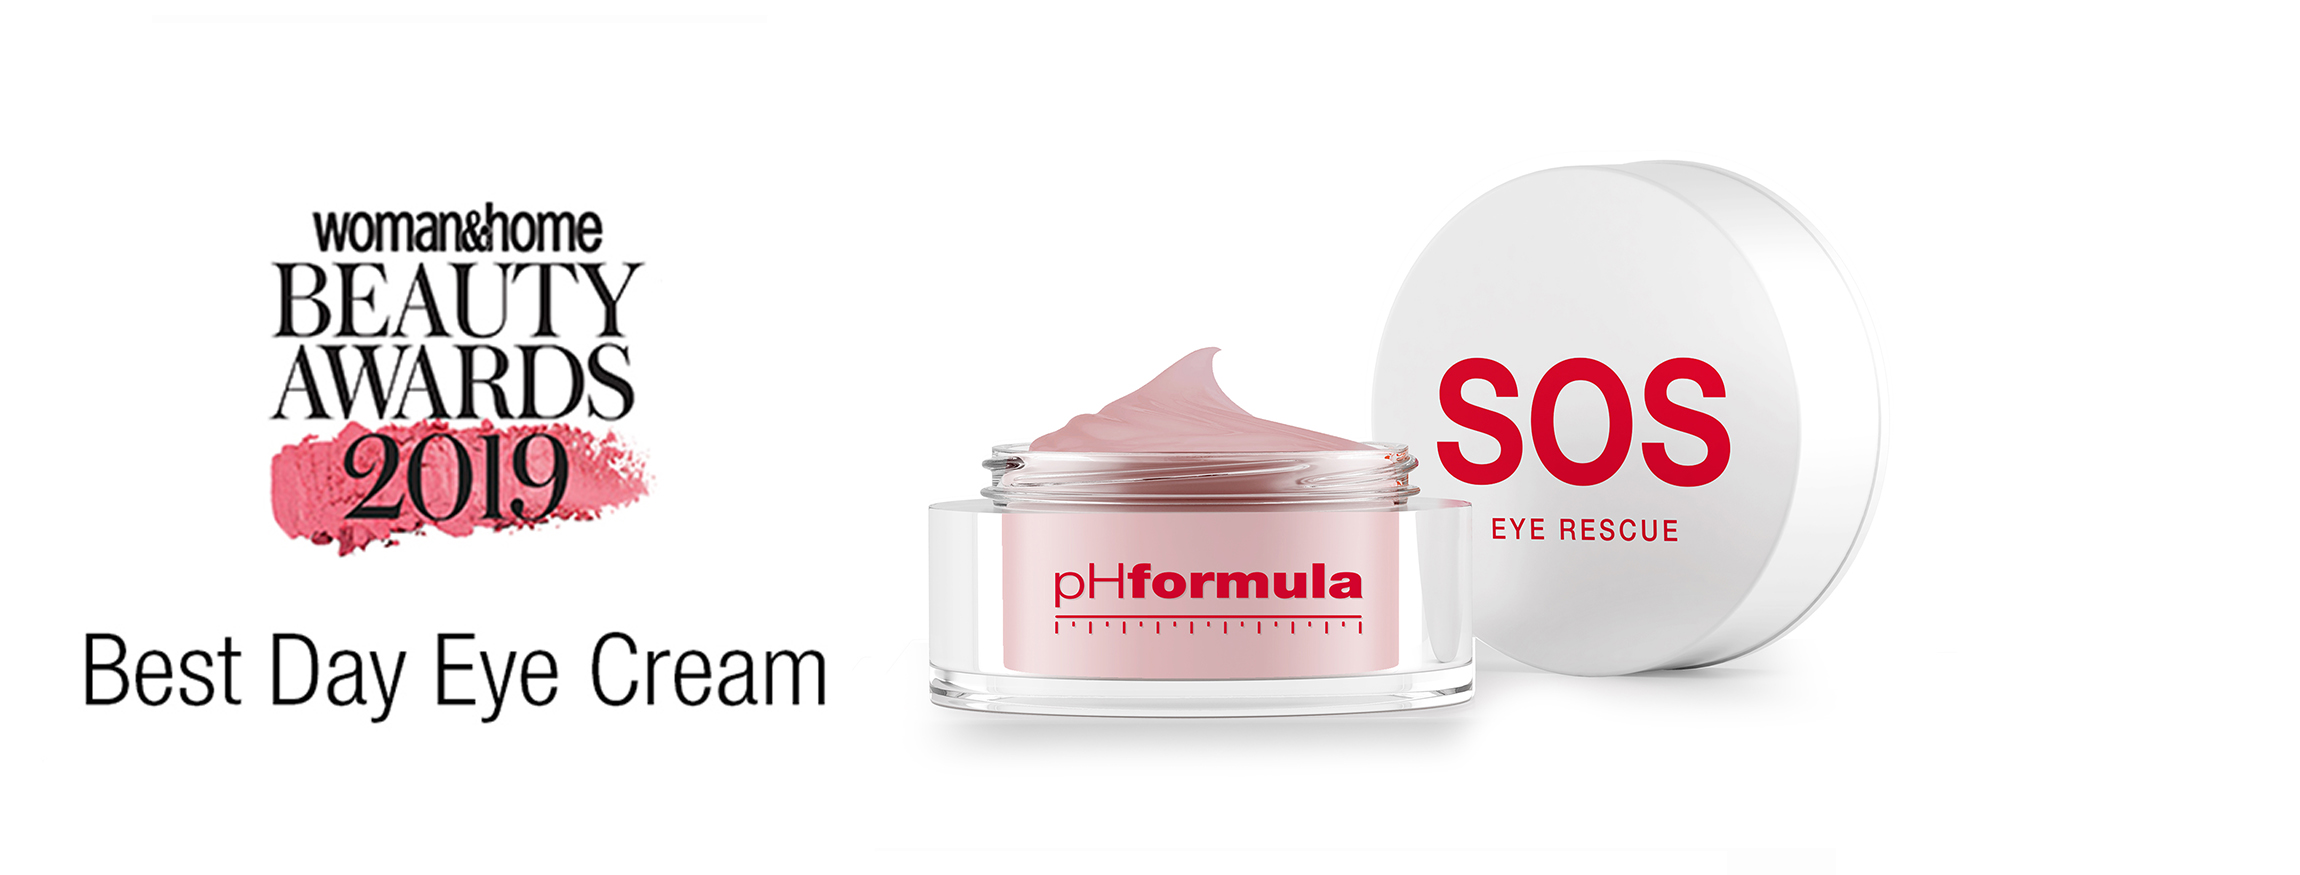 SOS Eye Rescue Cream awarded Best Day Eye Cream Beauty 2019